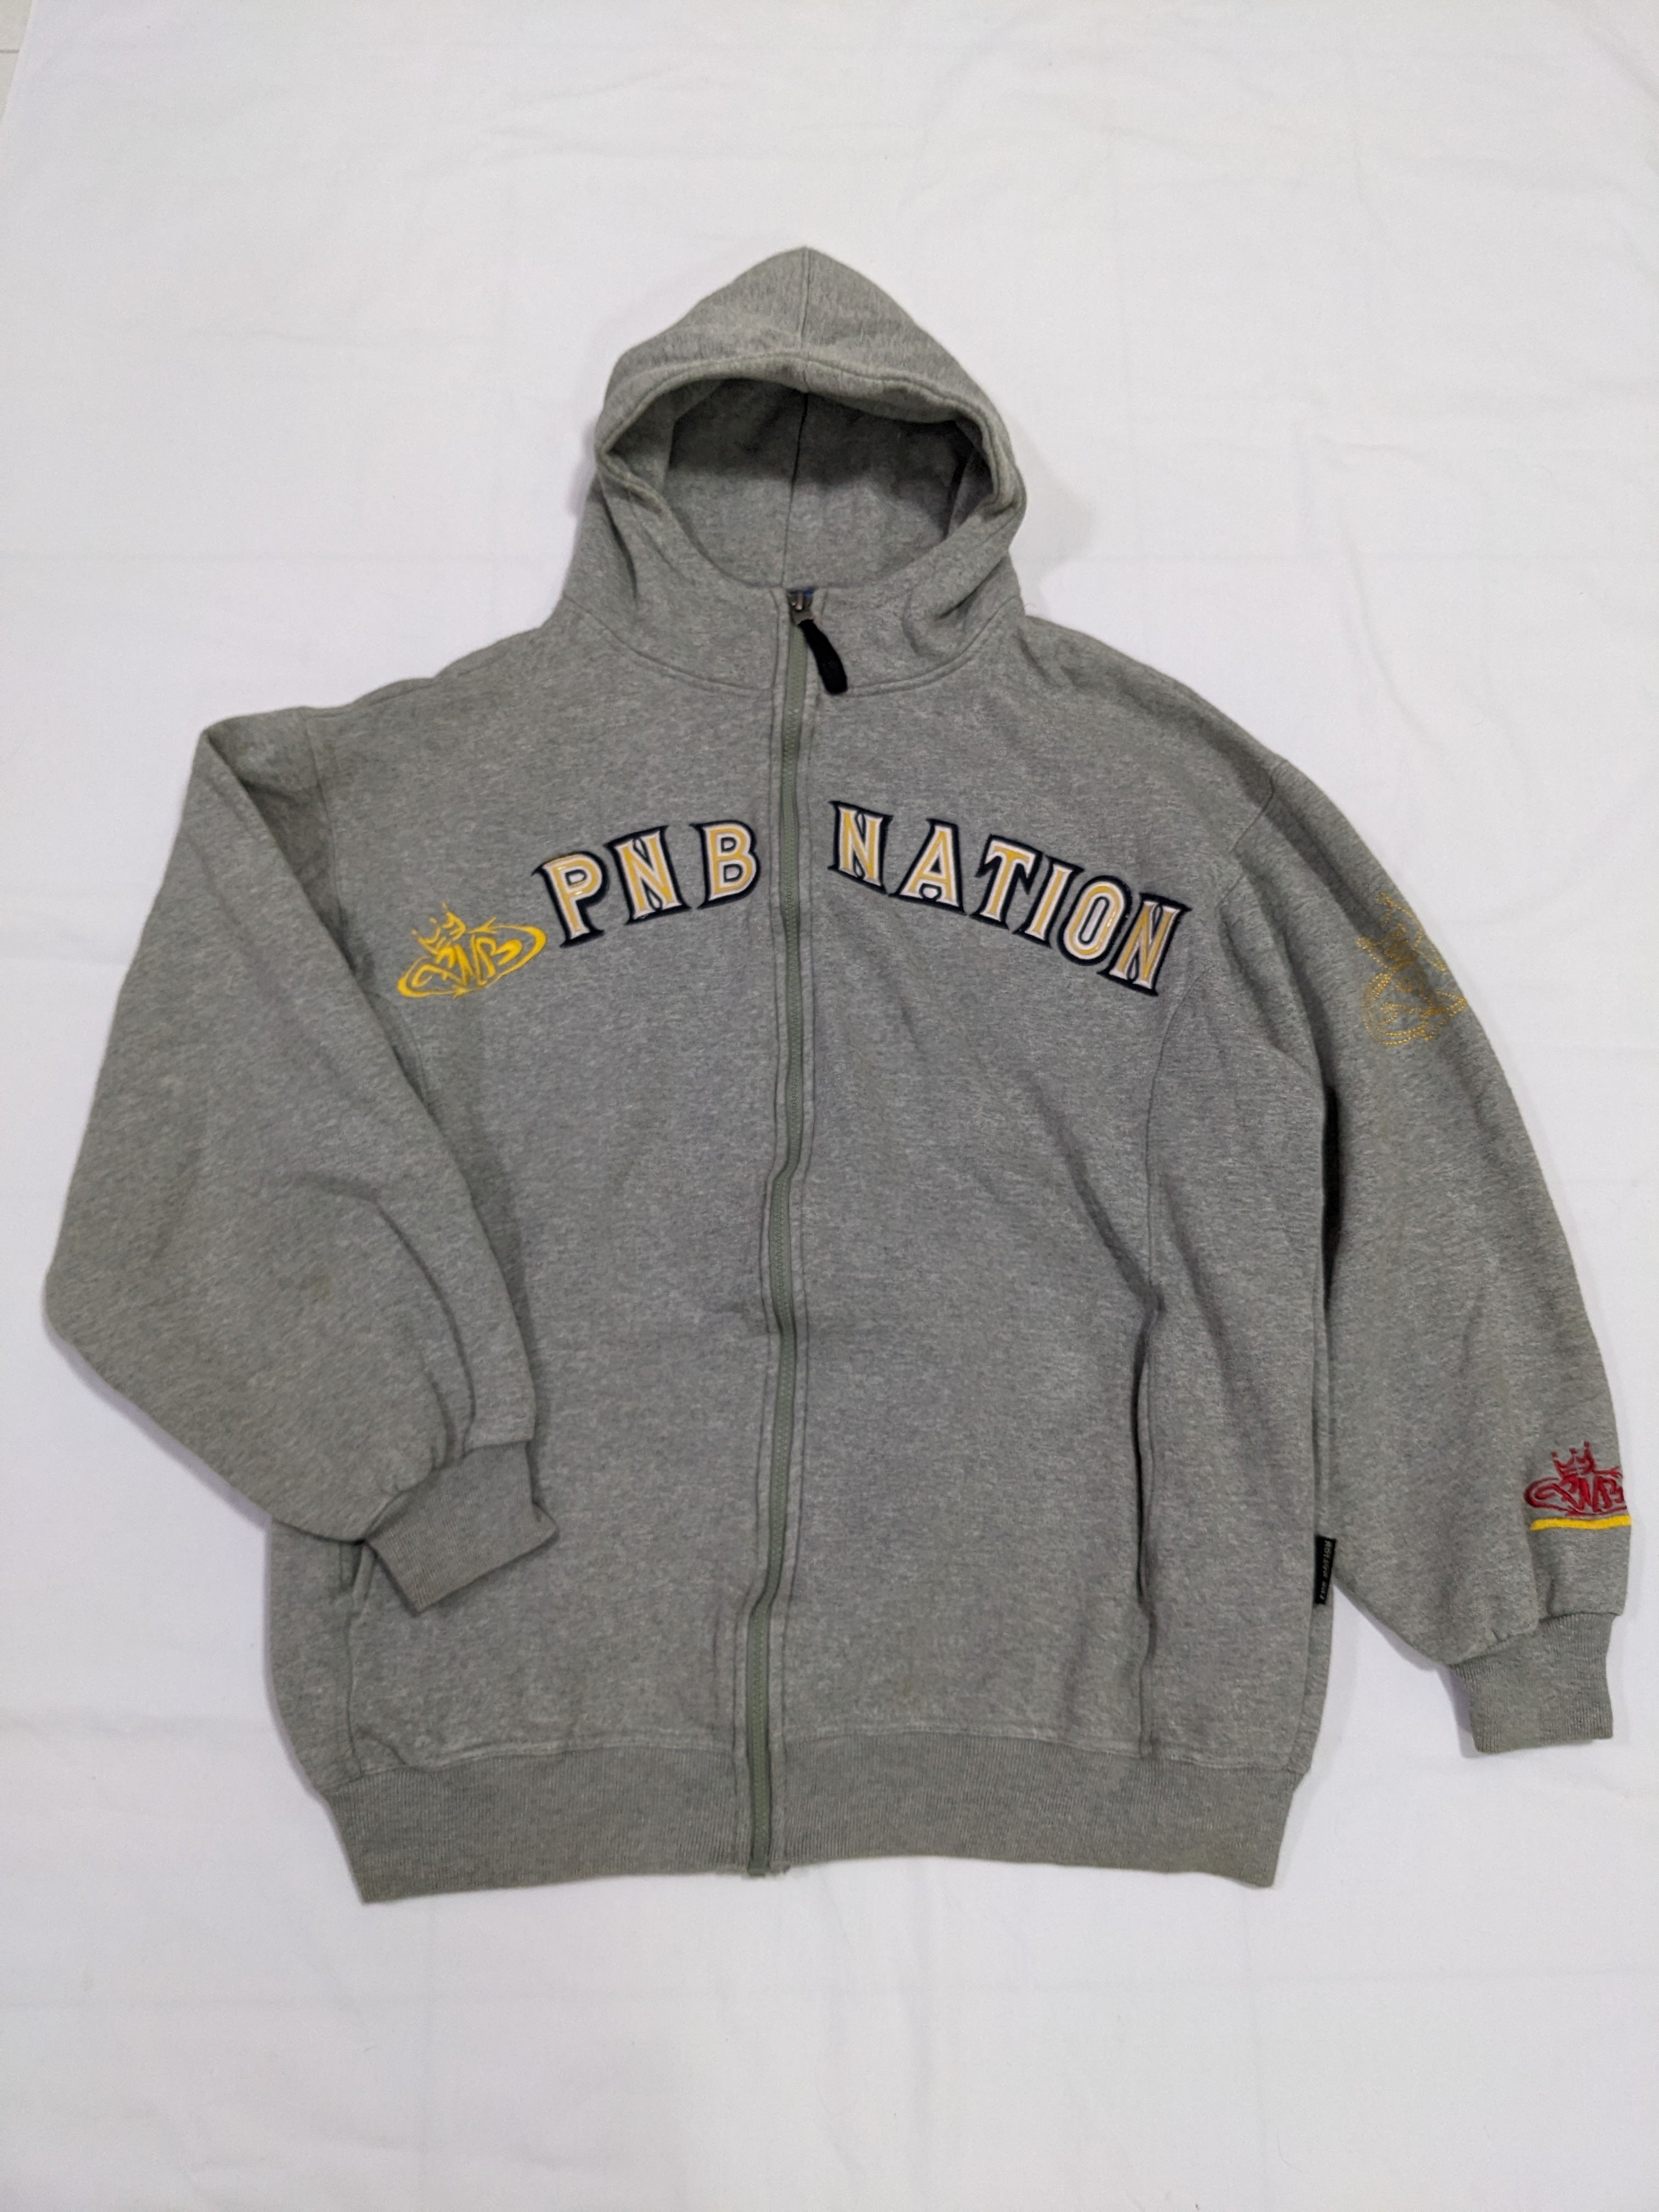 Vintage - PNB NATION Hip Hop Graffiti Gray Hooded Zip Up Jacket - 1